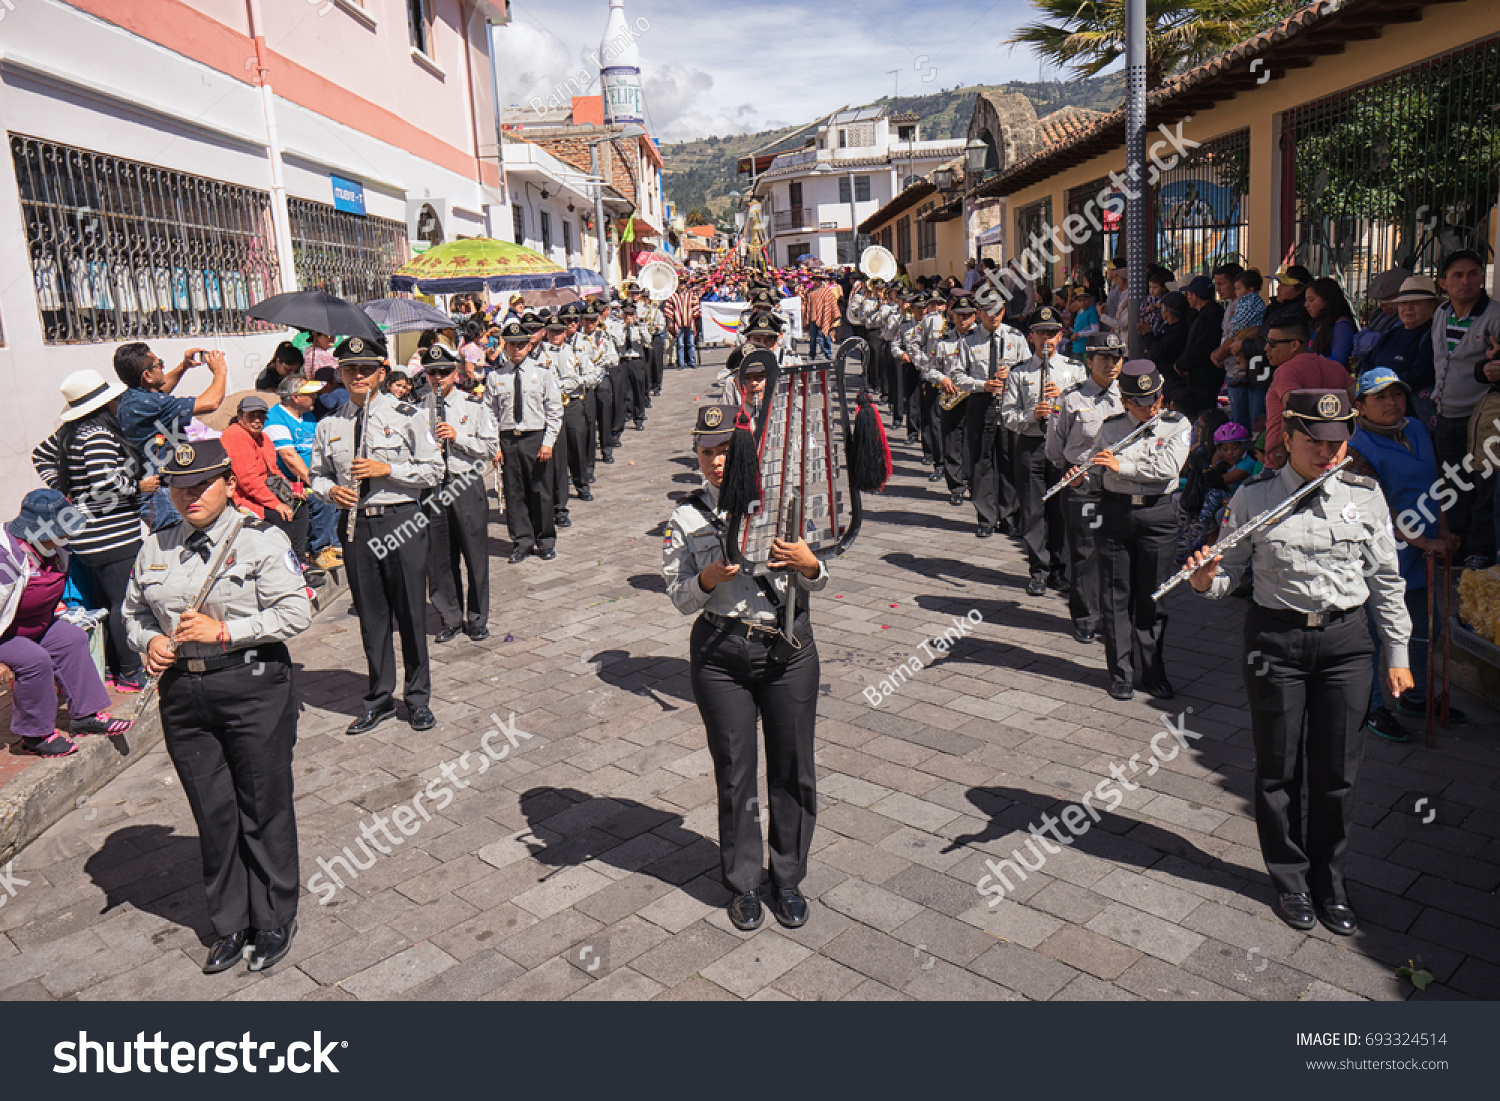 June 17 2017 Pujili Ecuador Military Stock Photo Edit Now 693324514